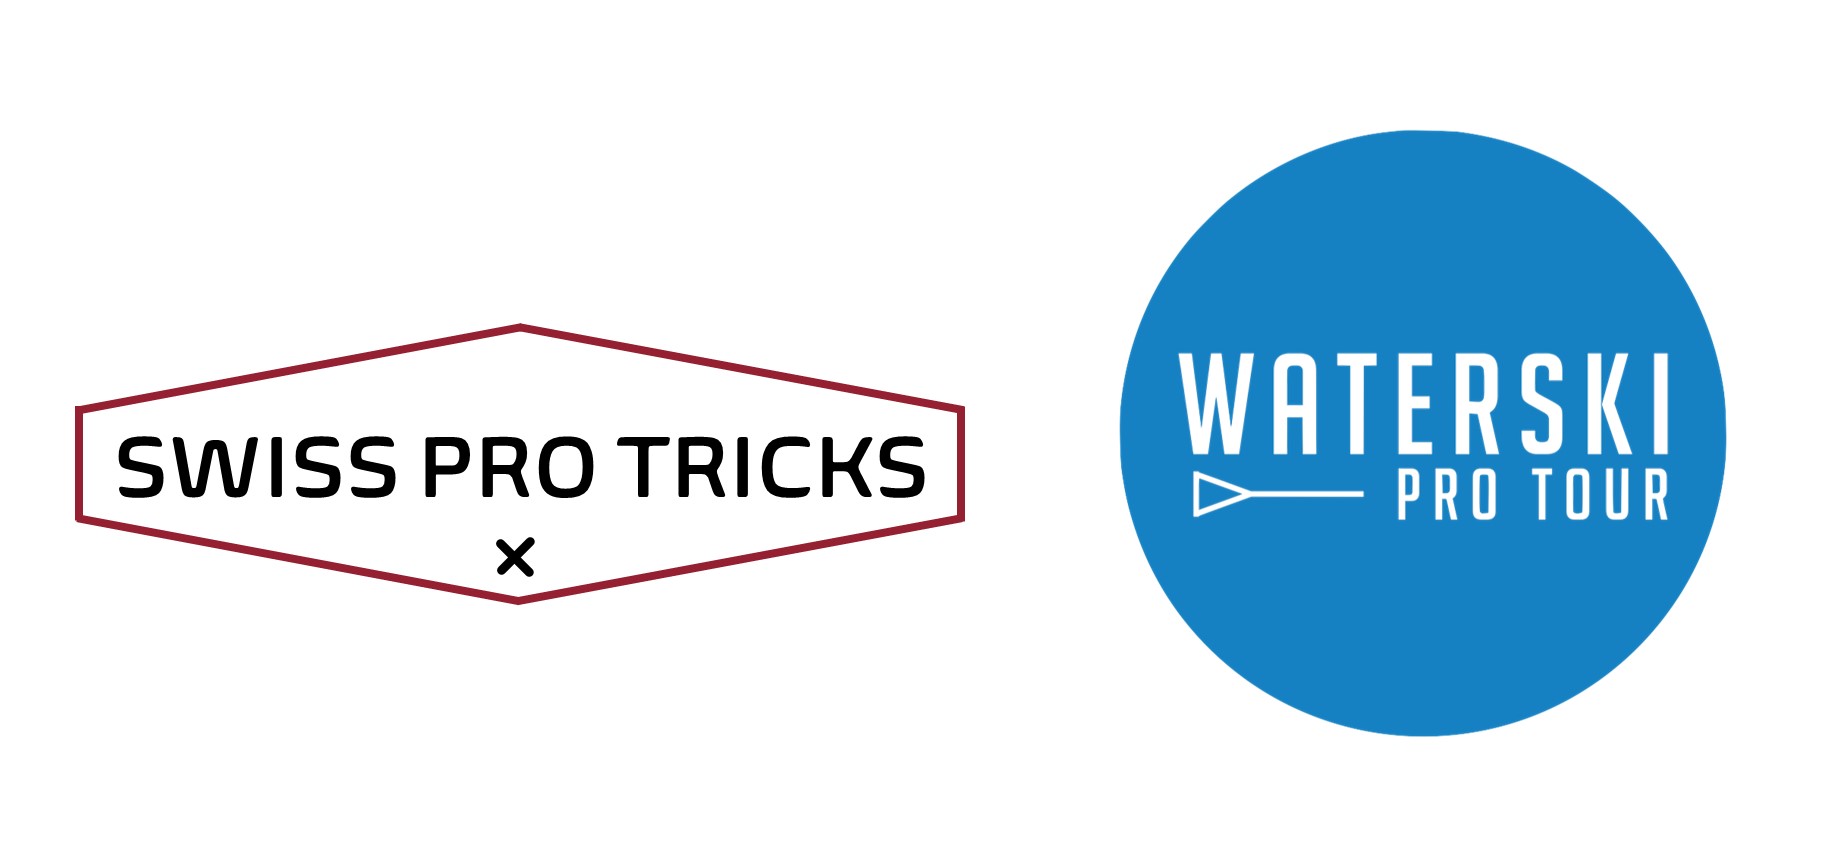 Swiss Pro Tricks - Waterski Pro Tour